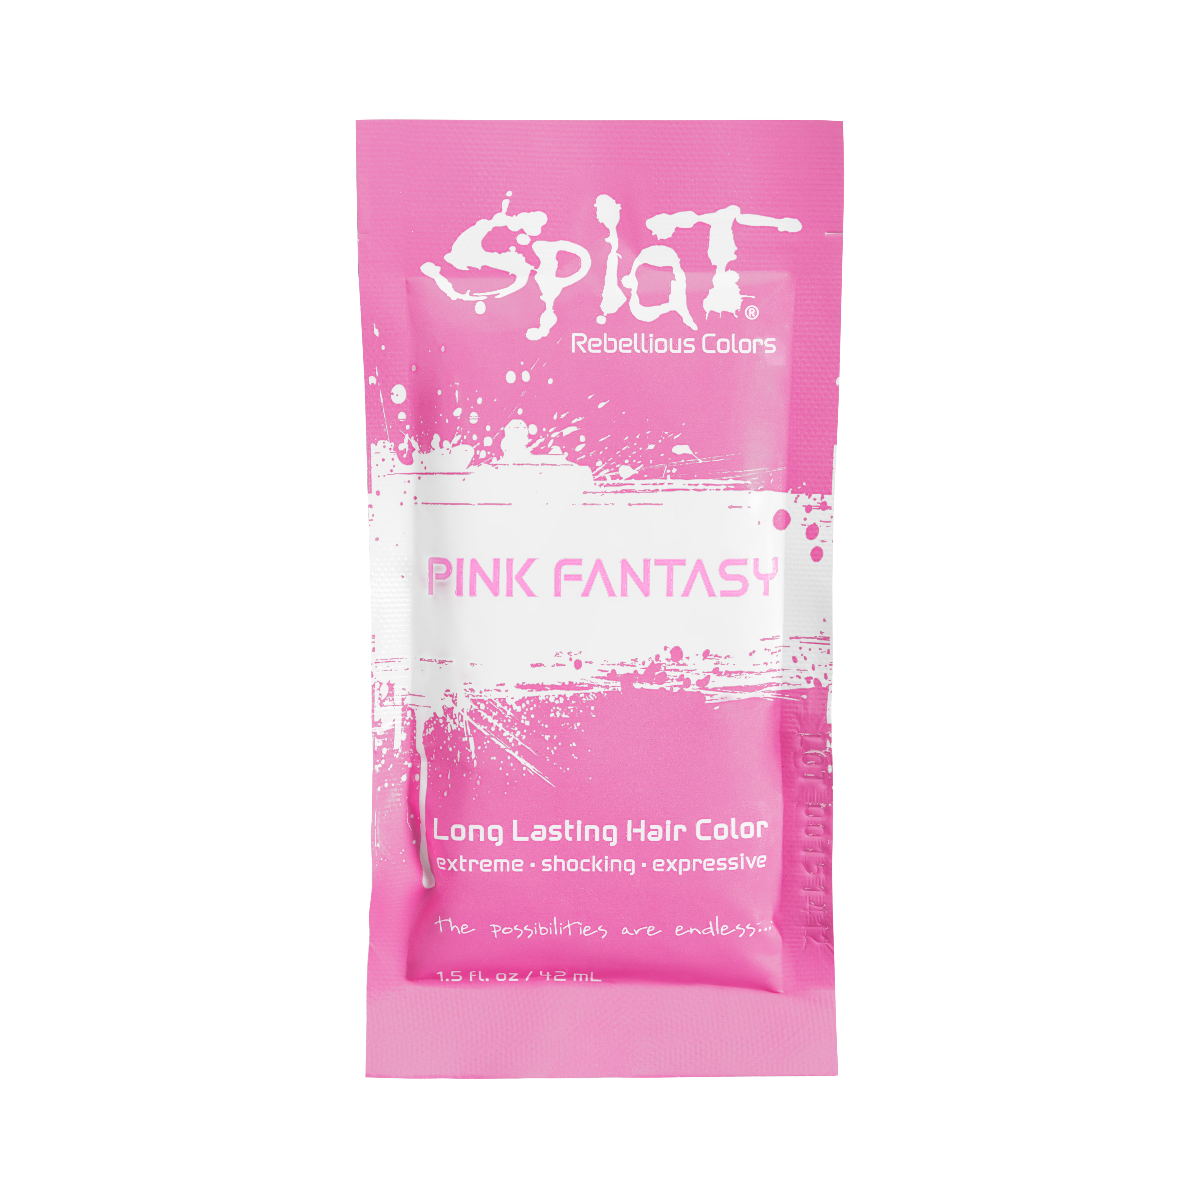 Splat Hair Dye Original Singles Foil Packet in Pink Fantasy Semi-Permanent Hair Dye